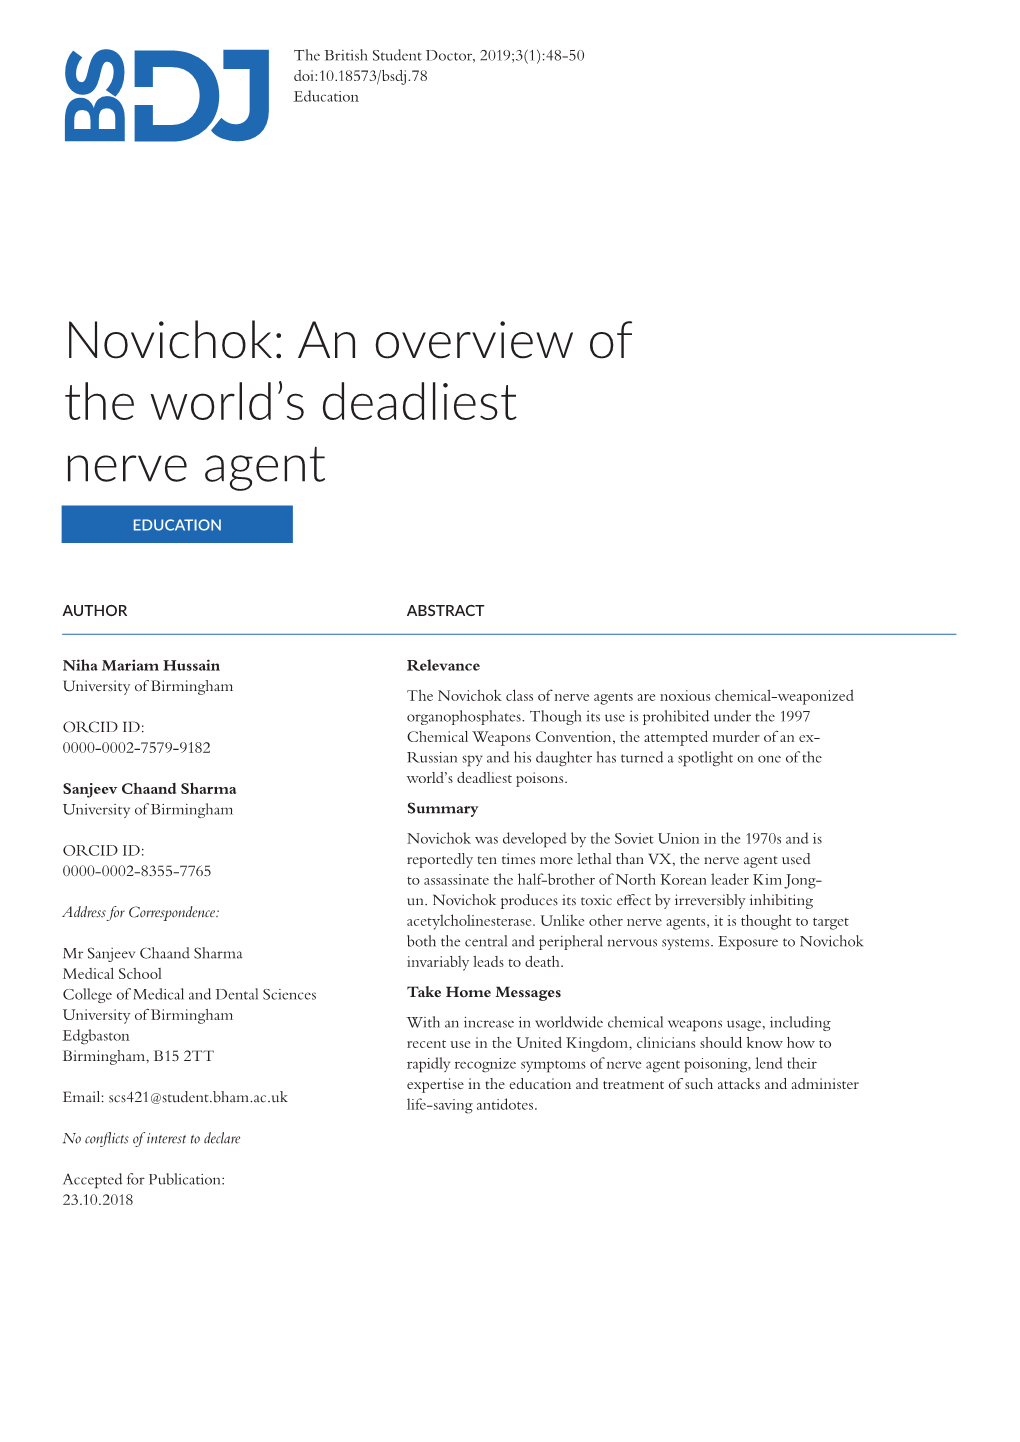 Novichok: an Overview of the World's Deadliest Nerve Agent